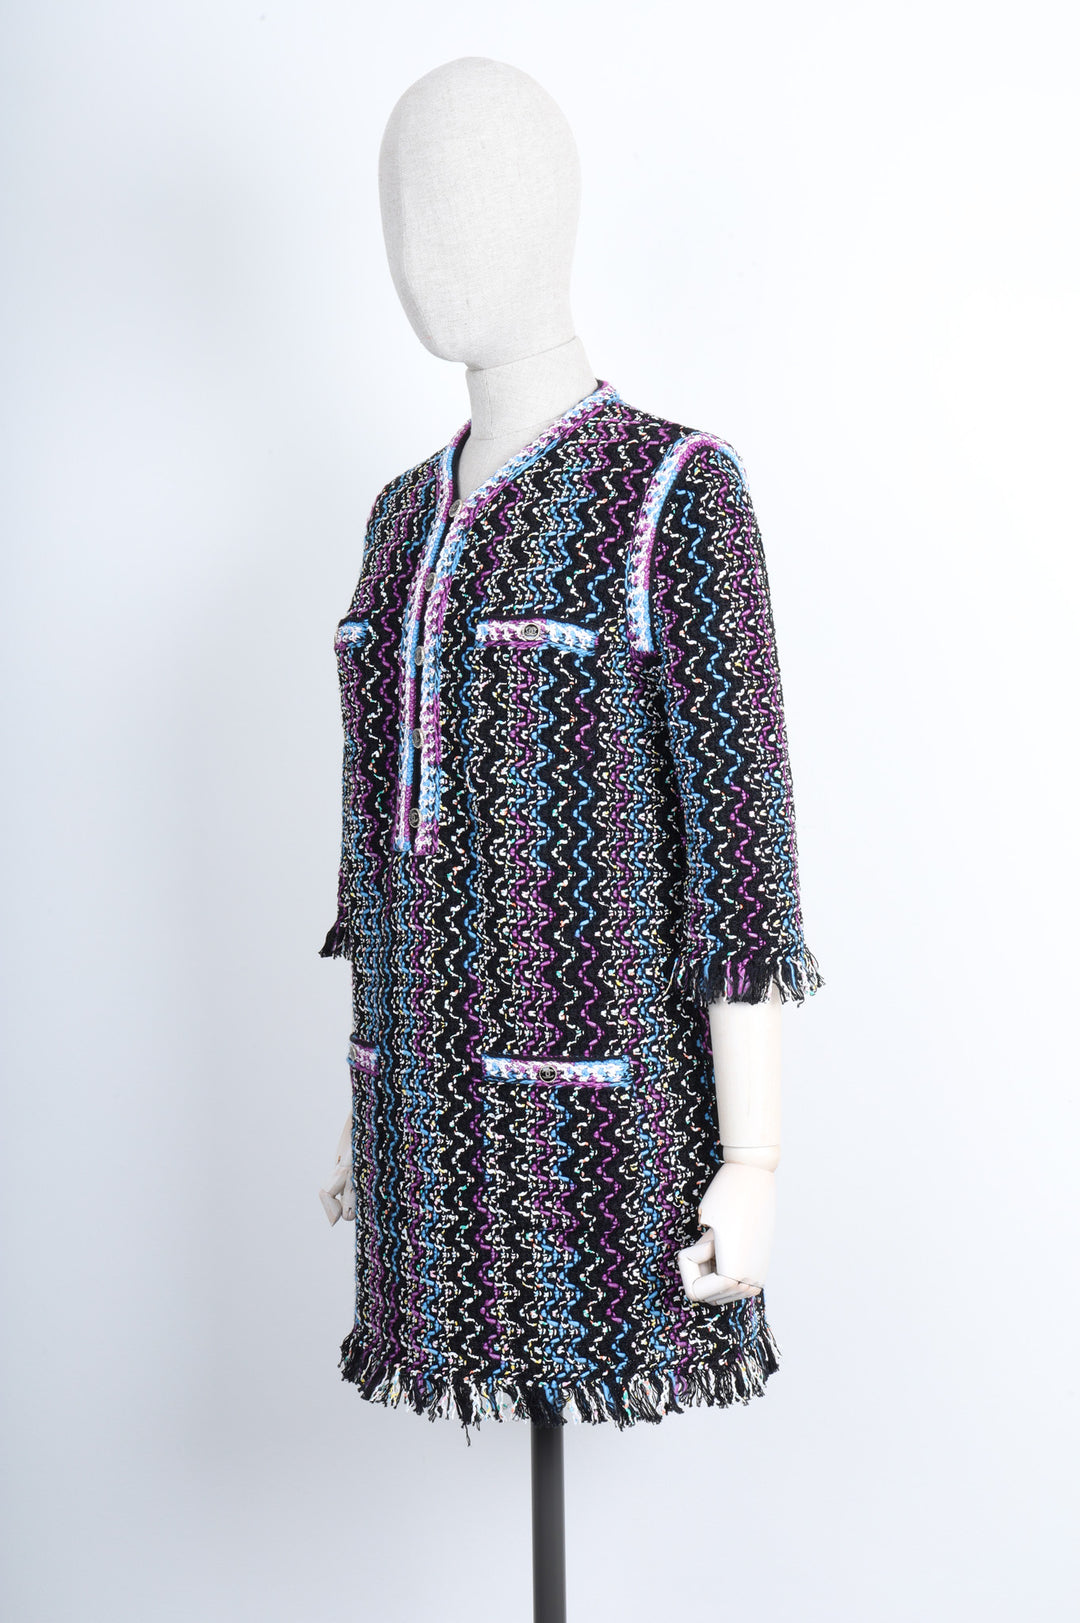 CHANEL Crochet Dress Violet Black